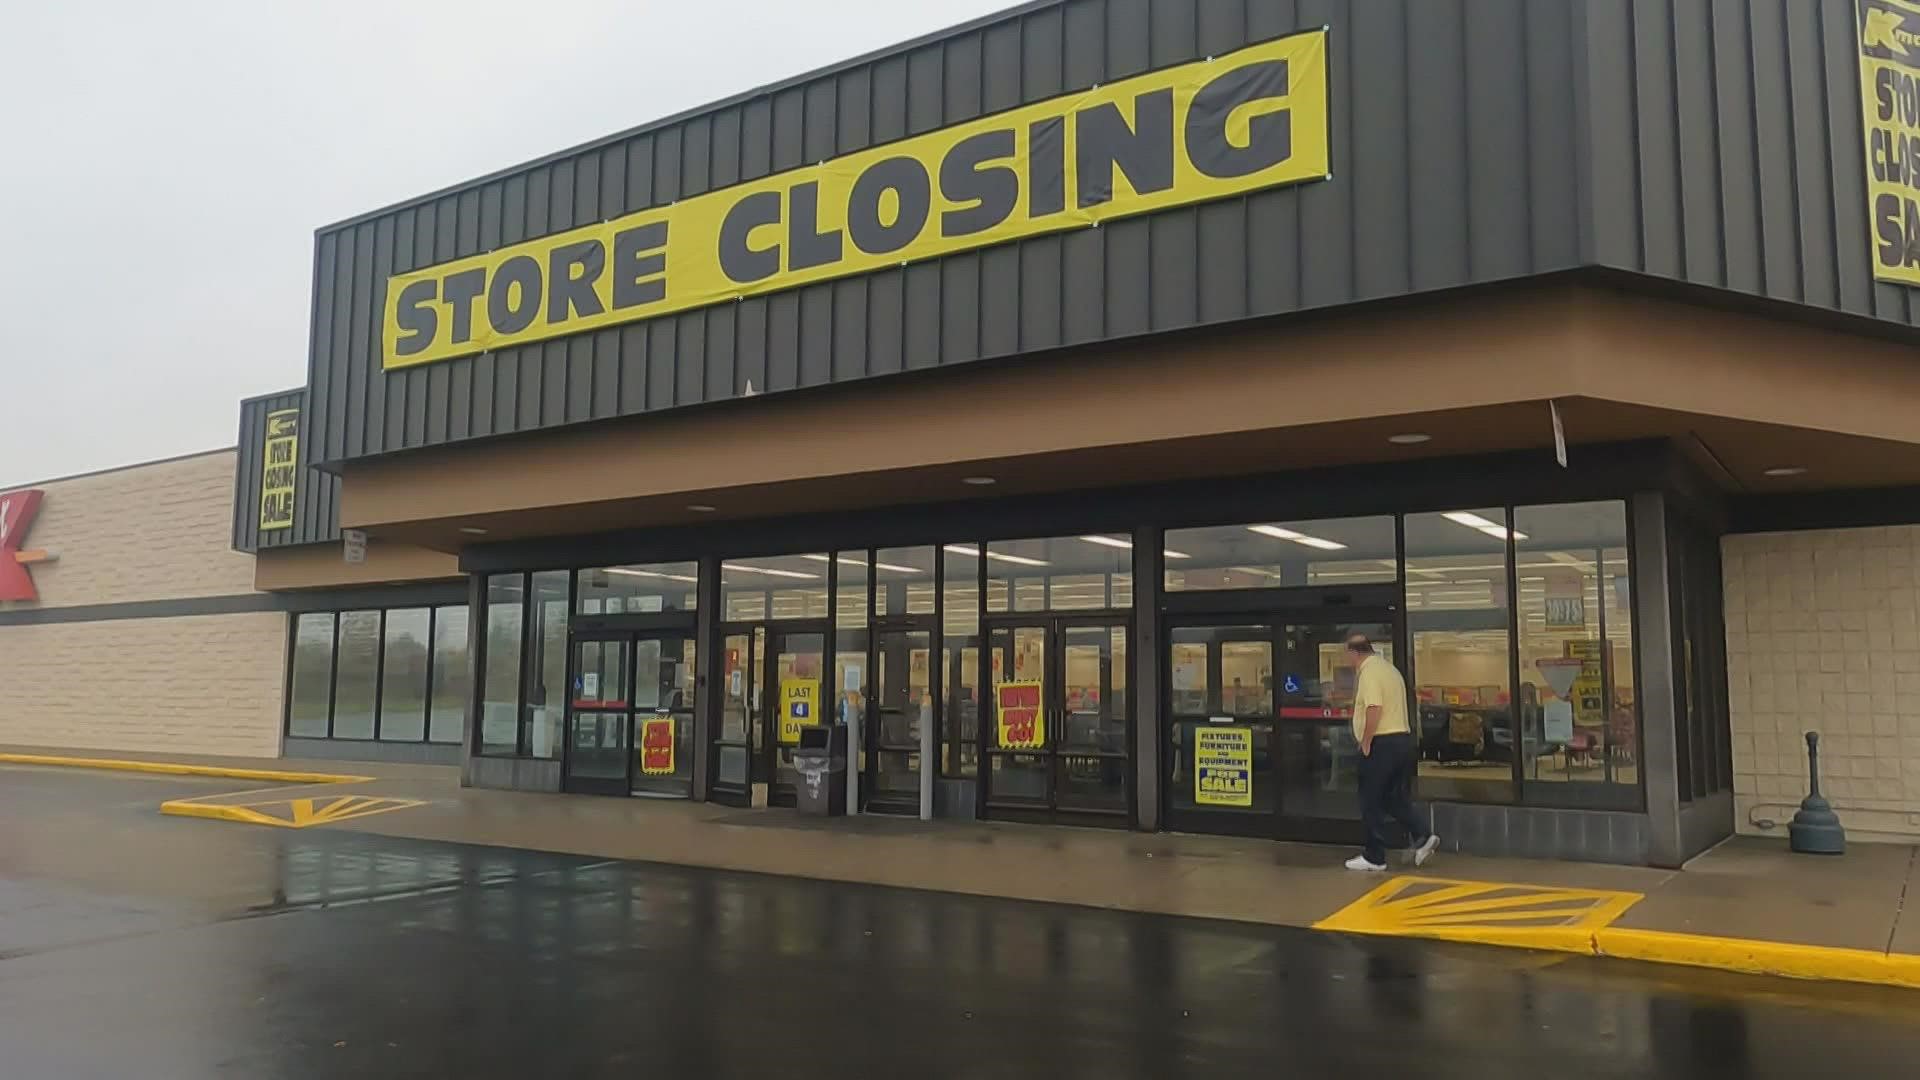 Last Kmart in Michigan is closed